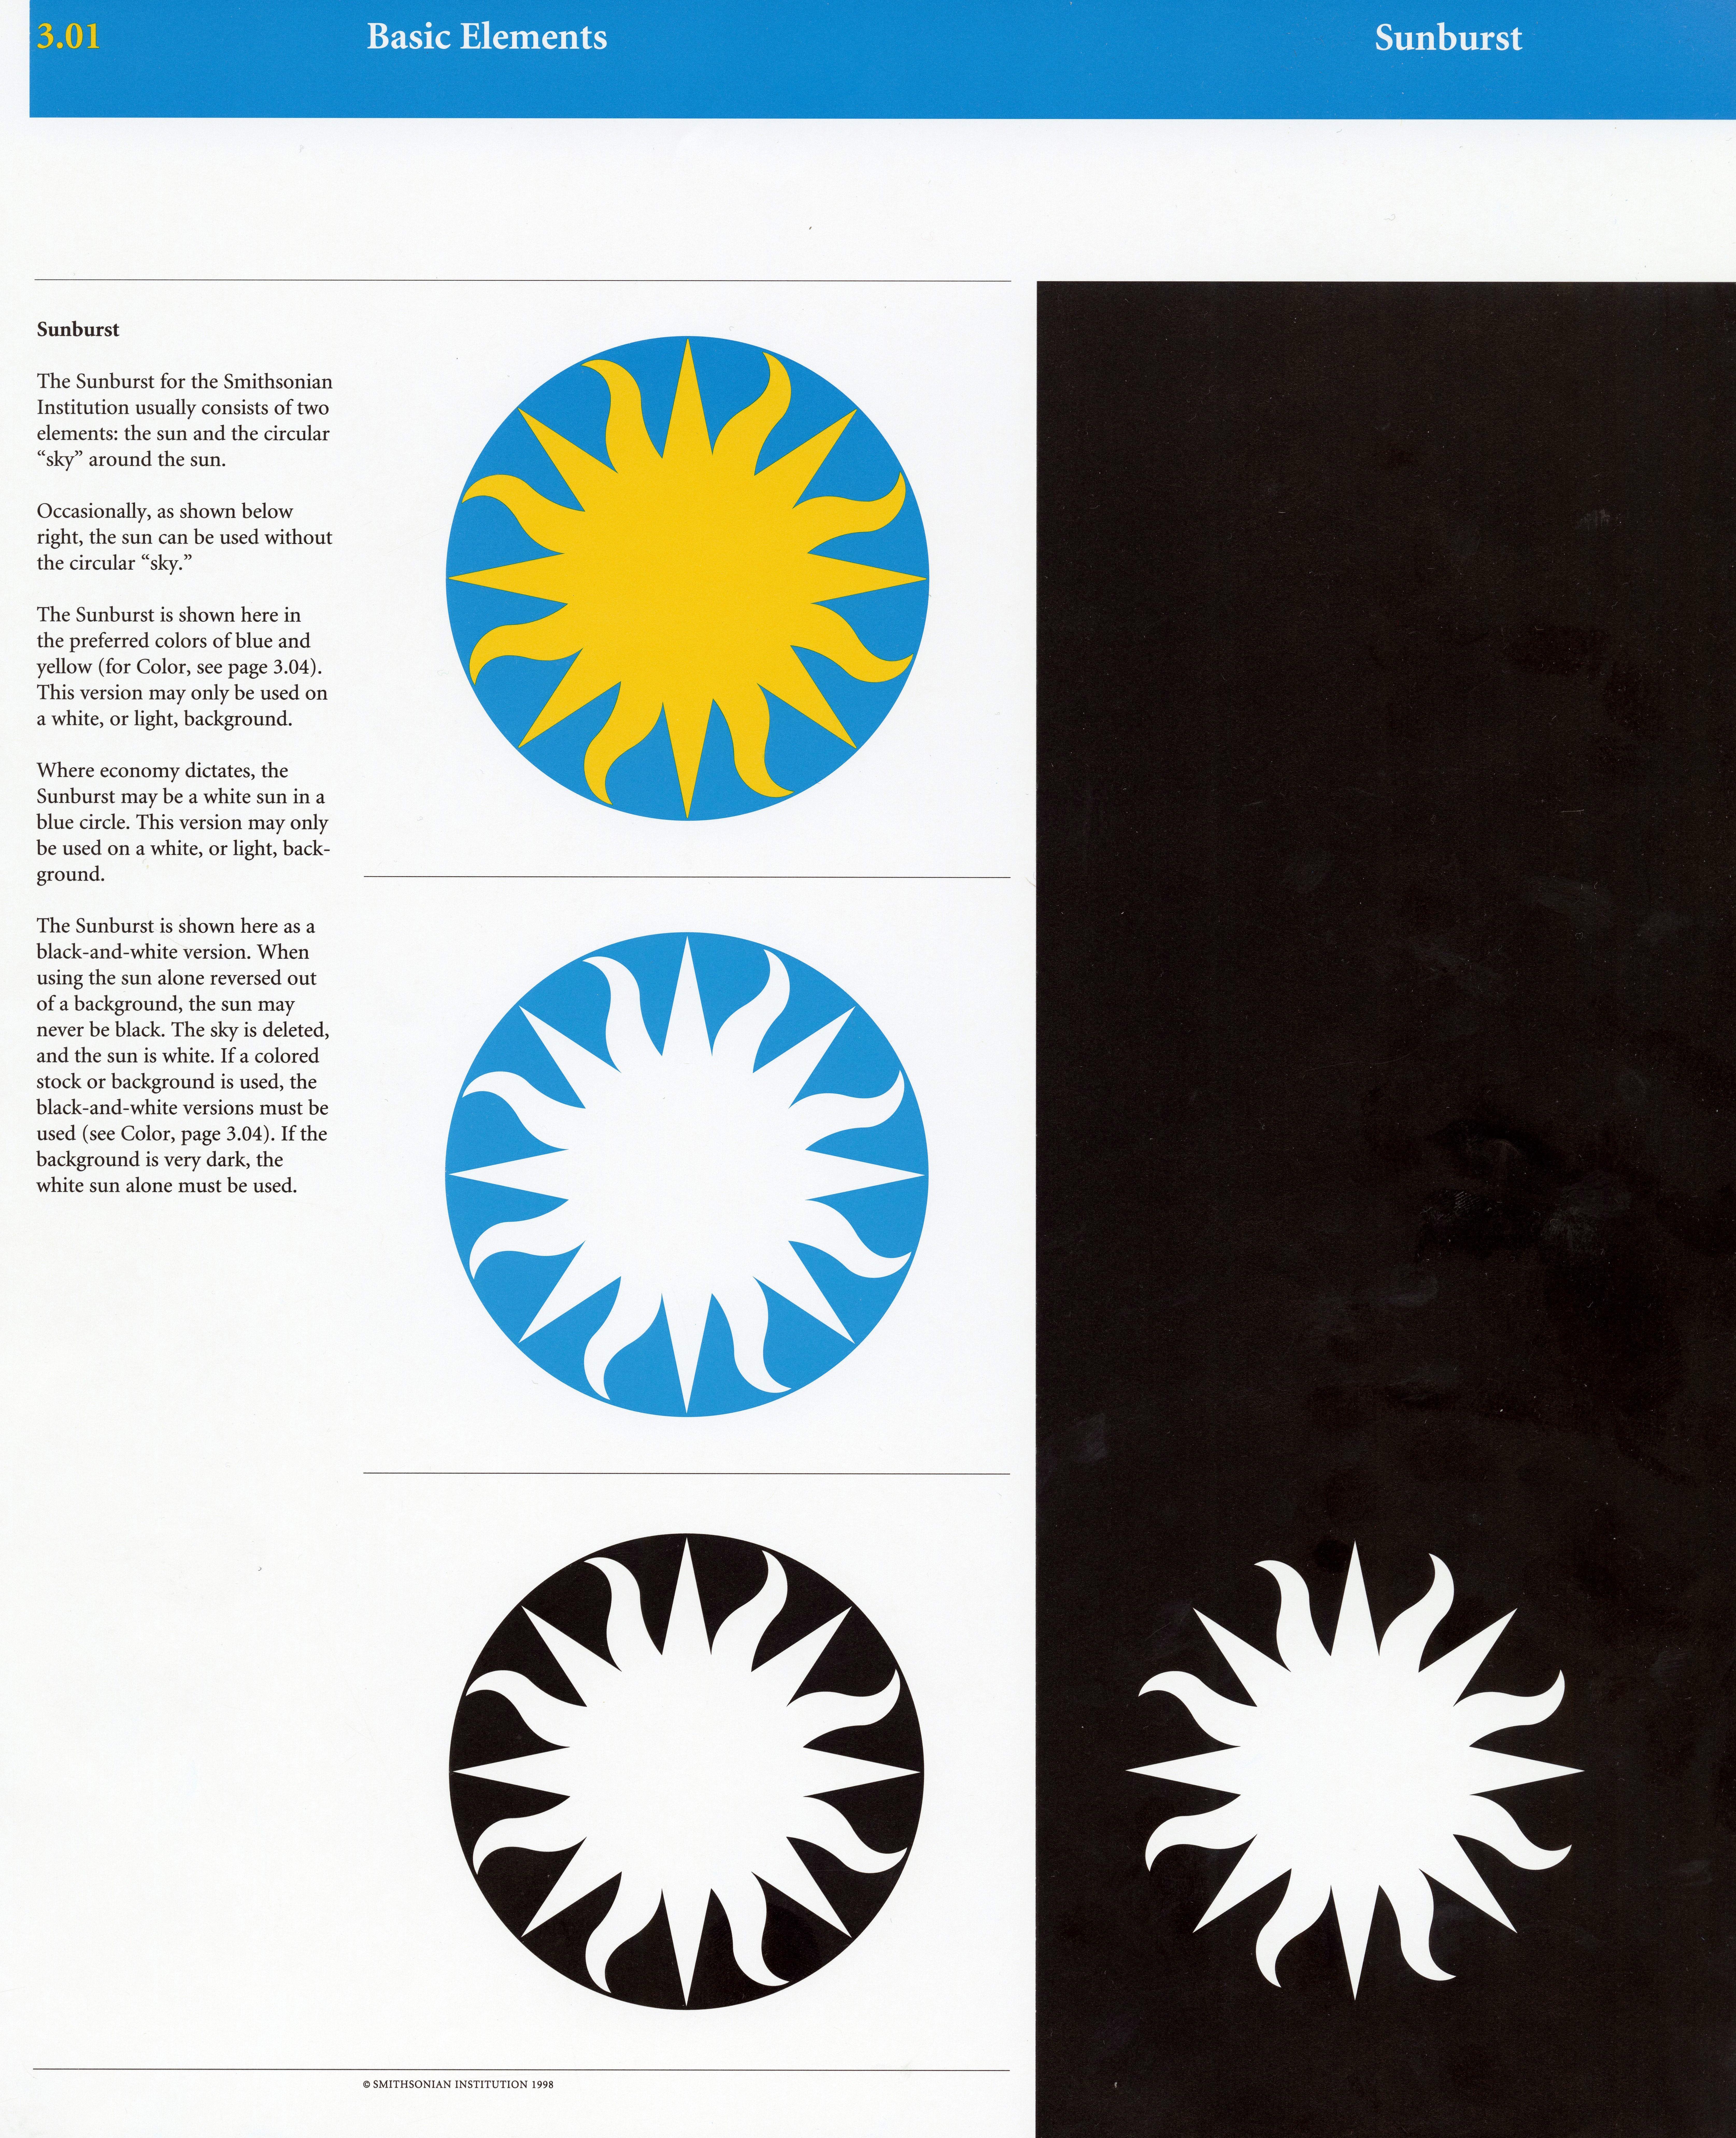 White Sunburst Logo - Design + Archives: One Smithsonian